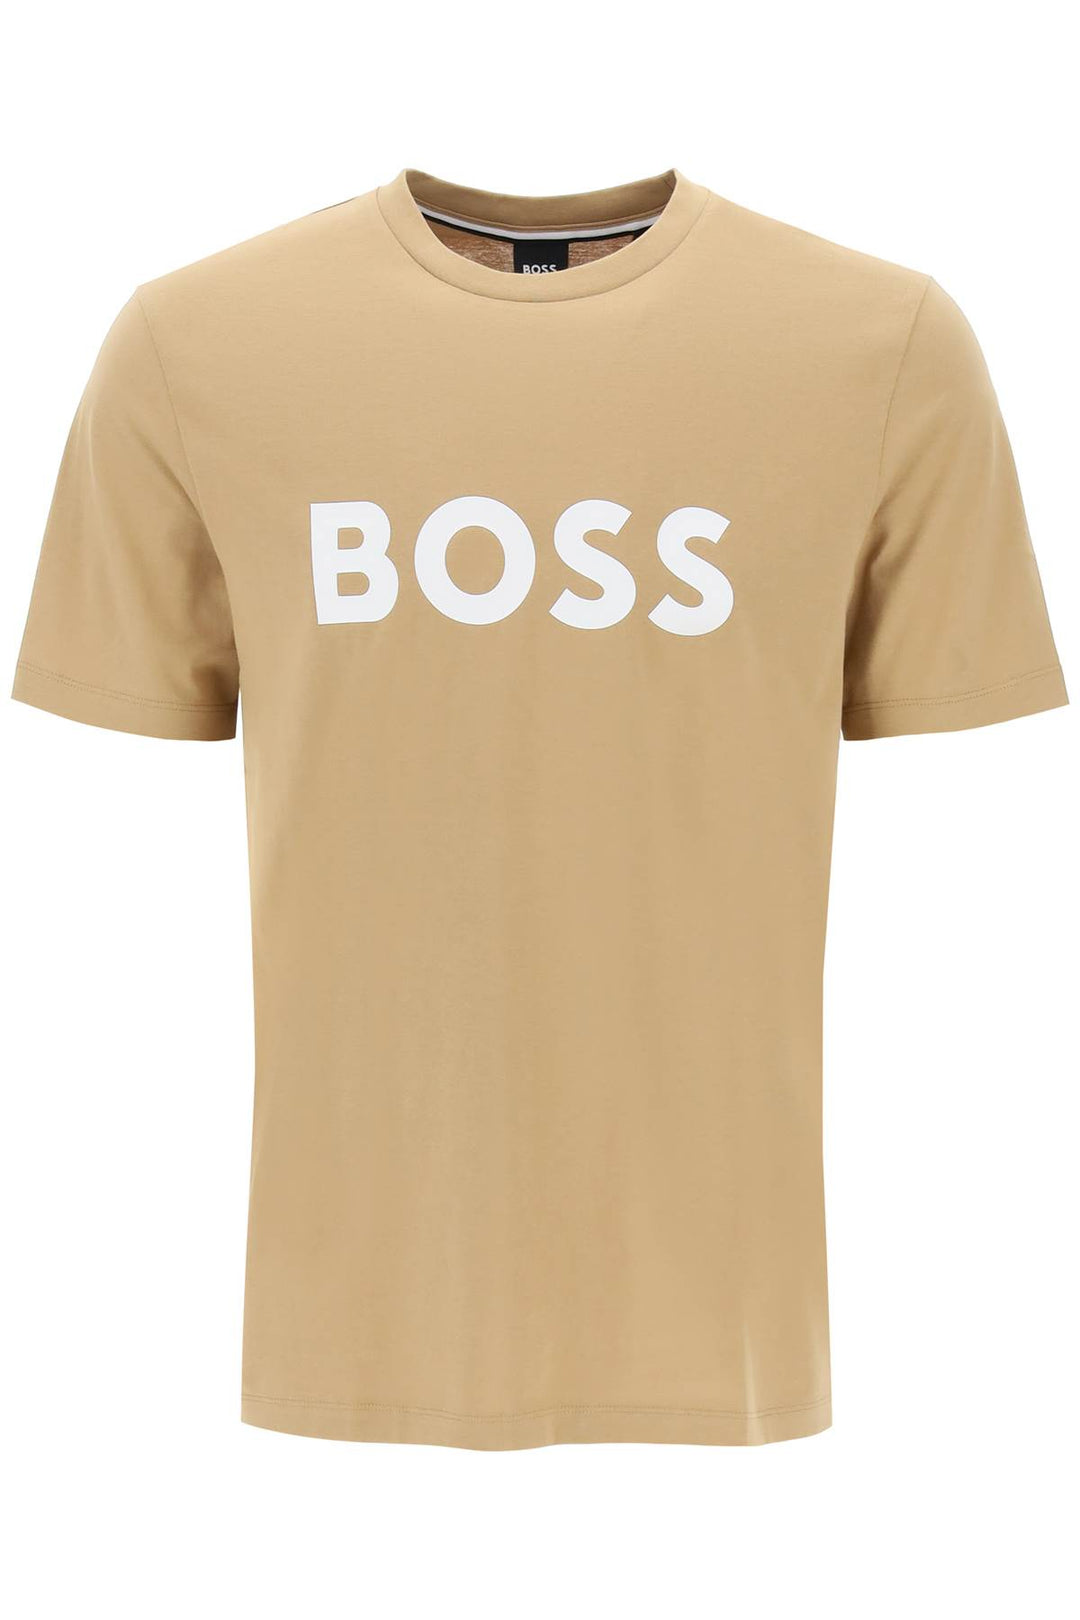 Boss Tiburt 354 Logo Print T Shirt   Beige